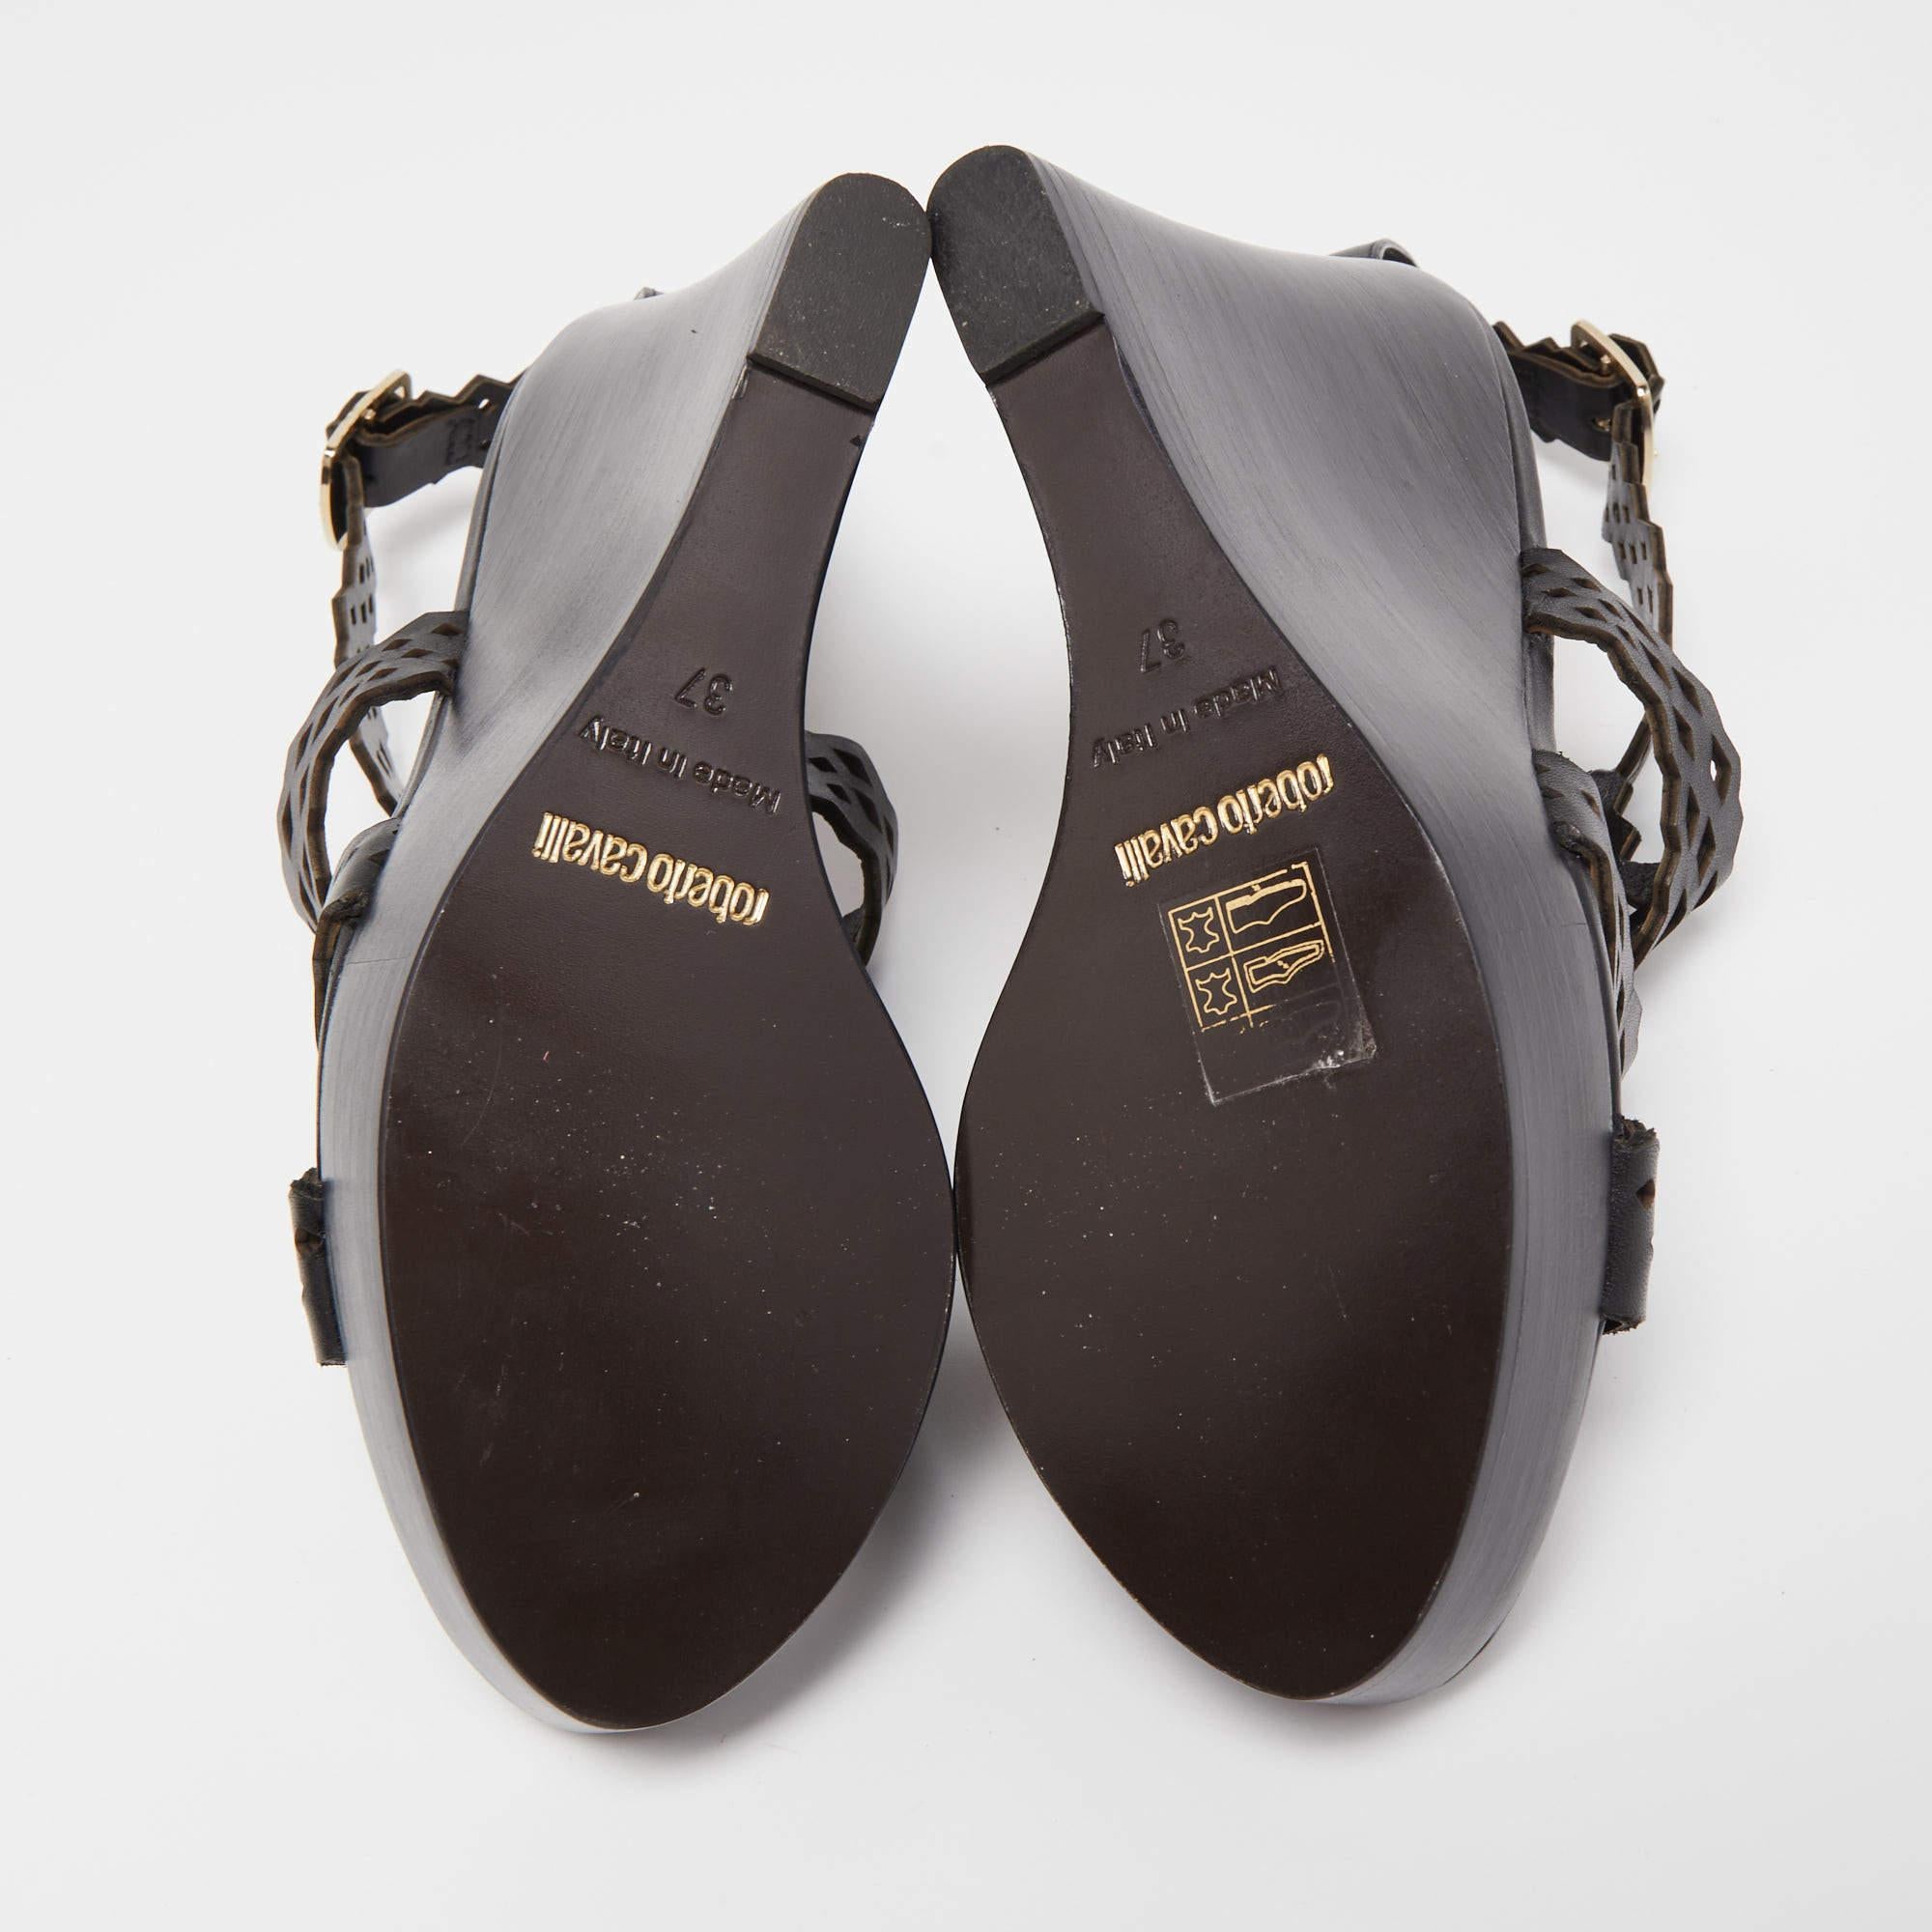 Roberto Cavalli Black Laser Cut Leather Ankle Strap Wedge Sandals Size 37 5